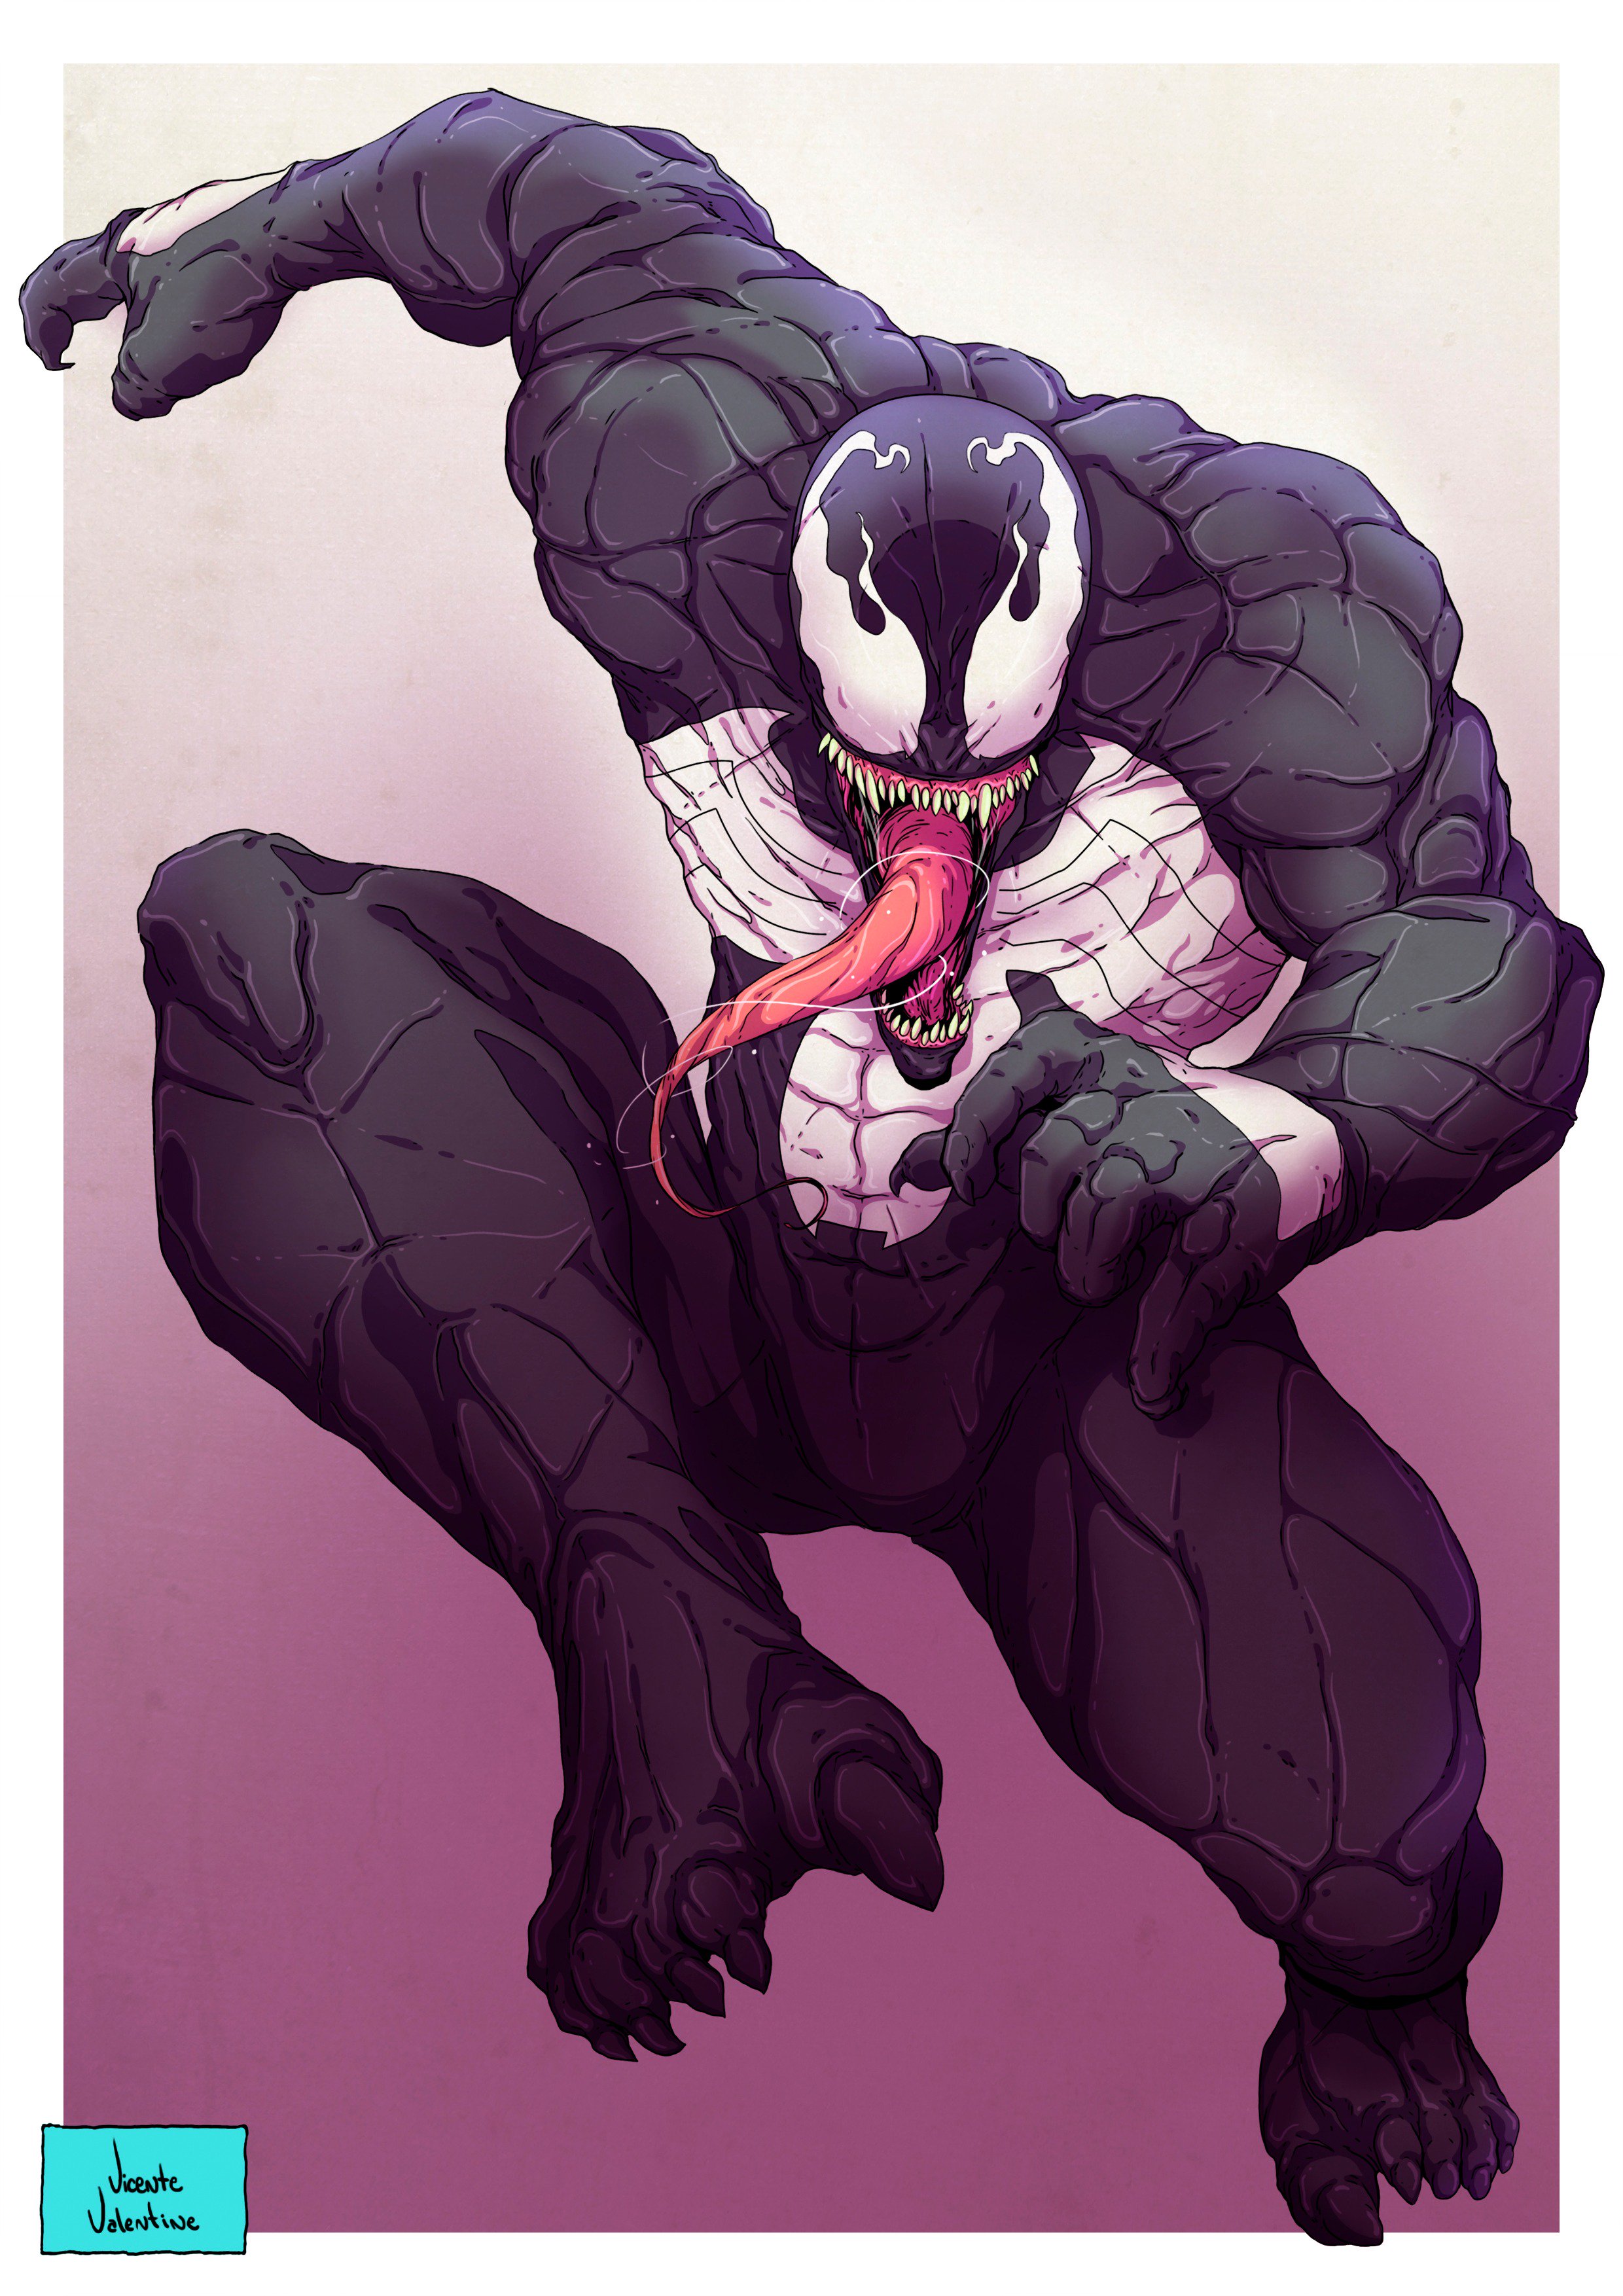 Vicente Valentine on Twitter: "Venom - Fan Art #Venom #FanArt #Spiderman #Classic #Photoshop #VicenteValentine #Marvel #MarvelComics https://t.co/LZP8SP1a2D" /